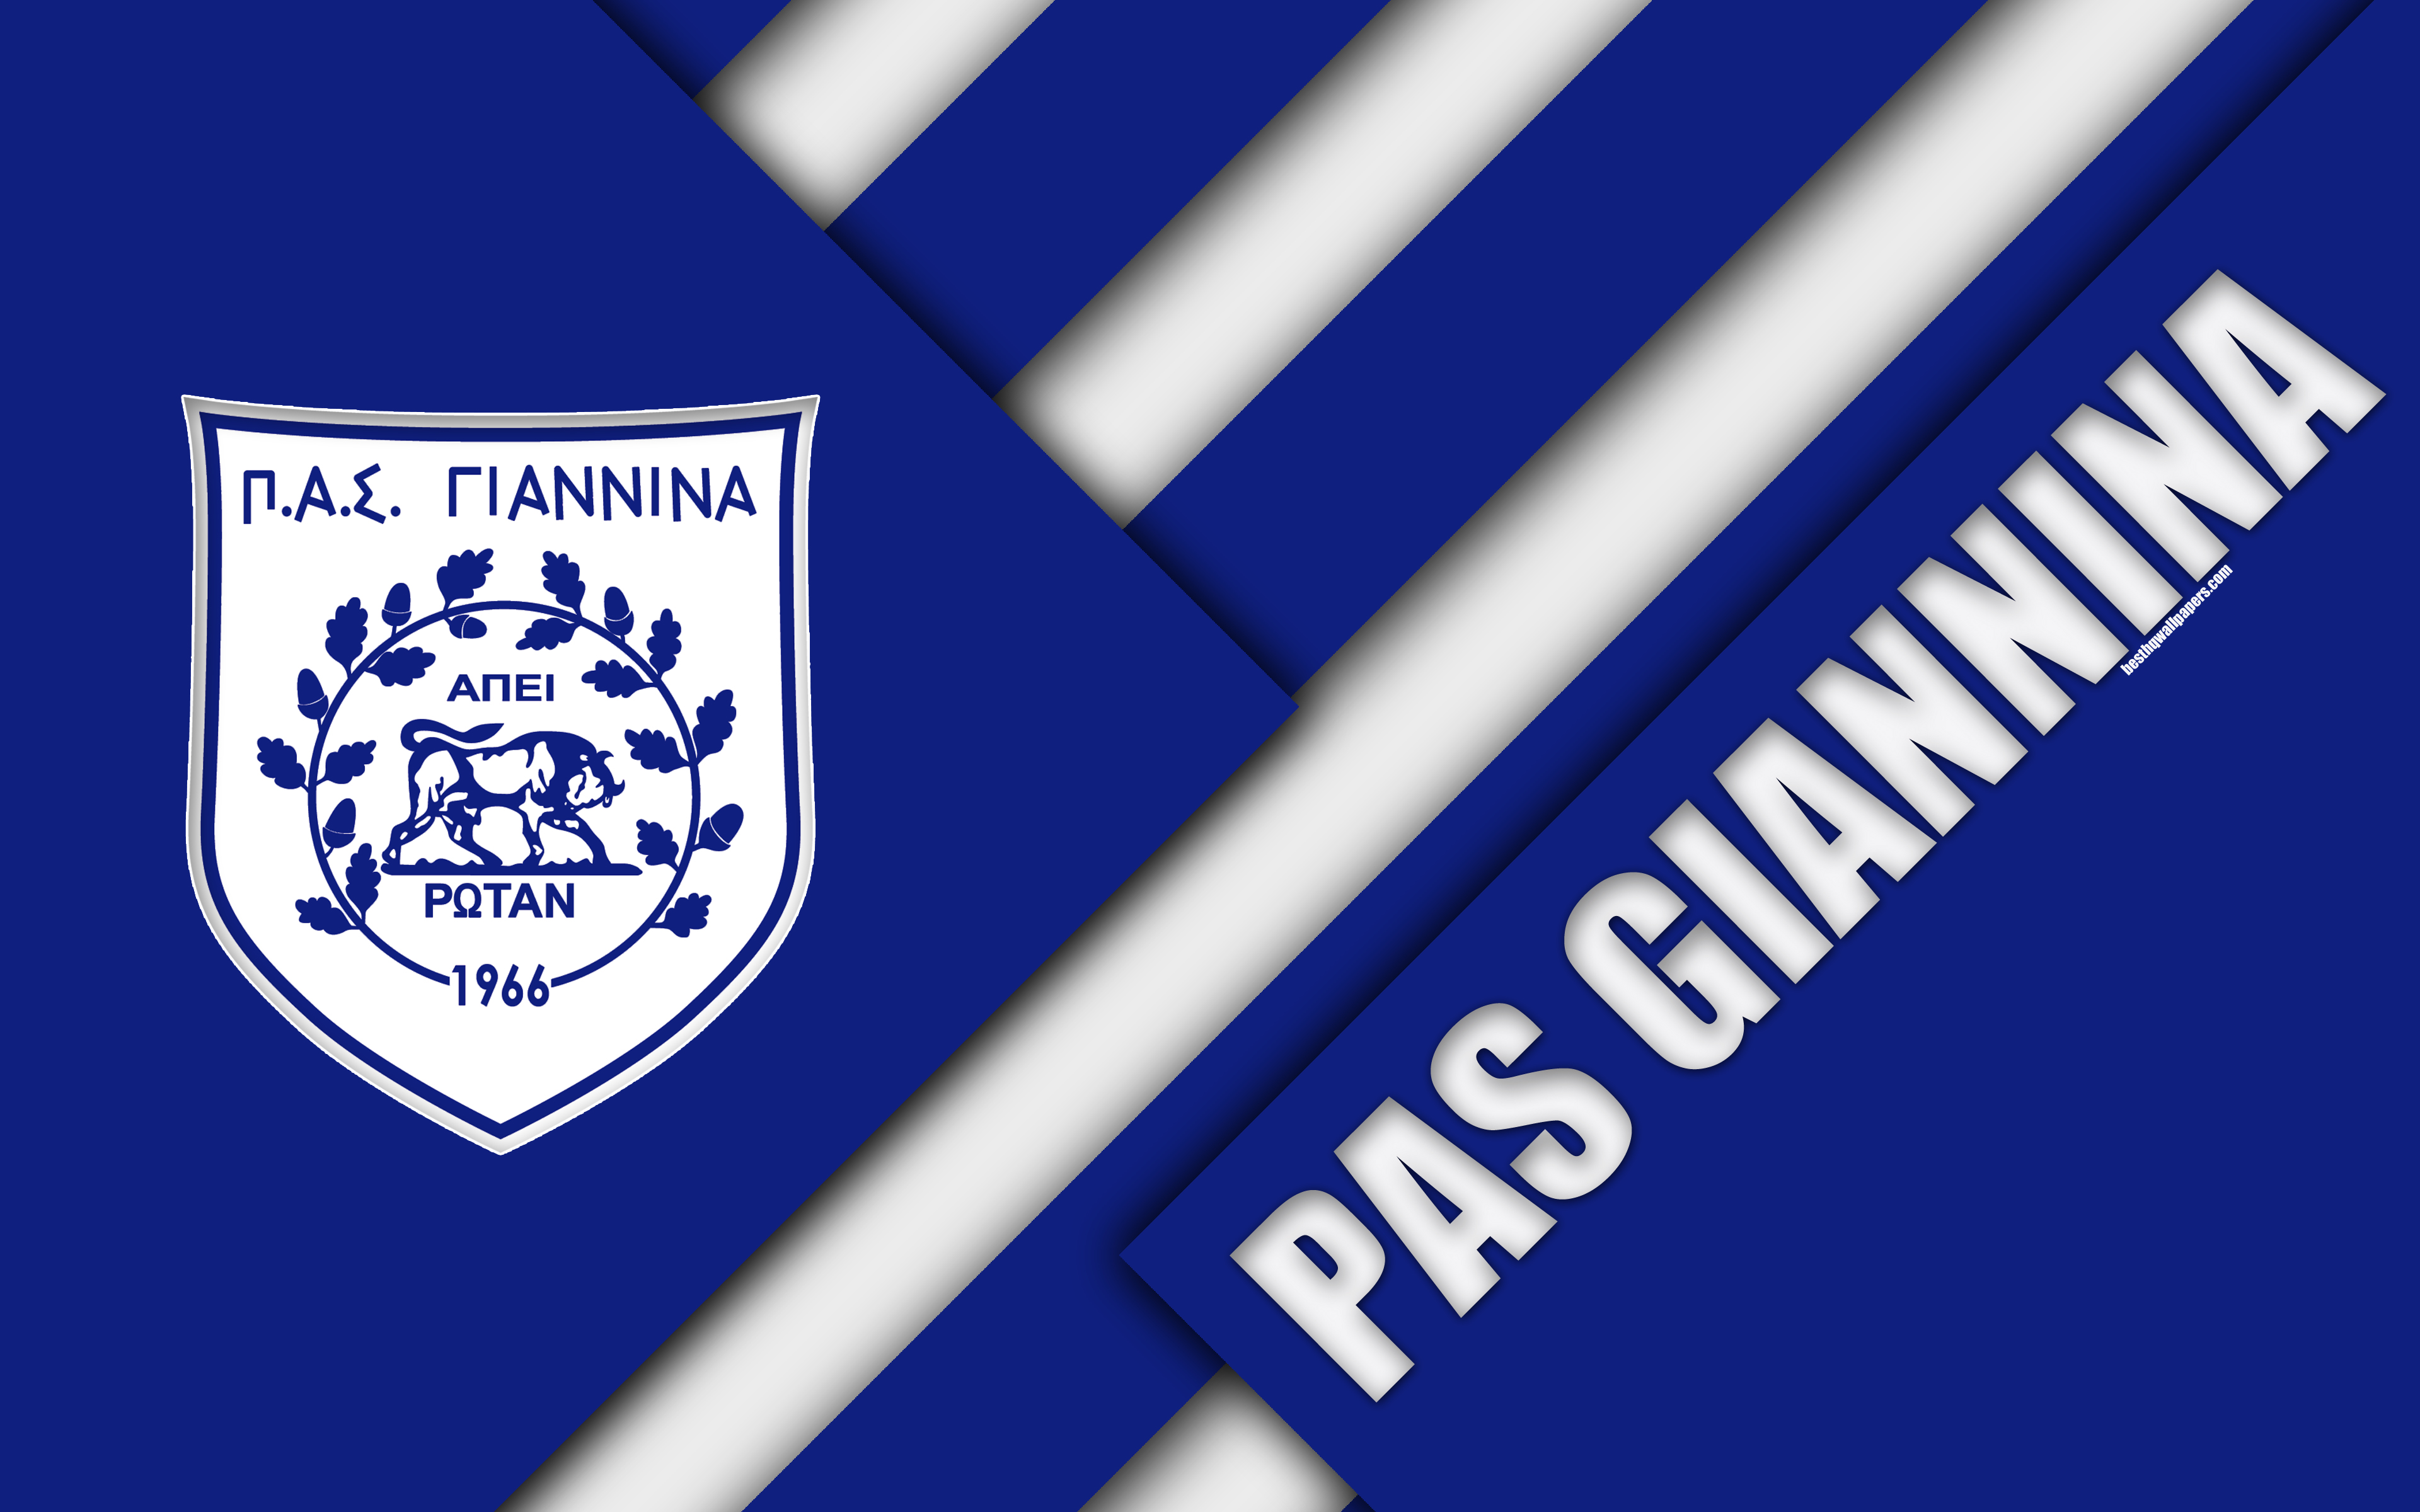 Handy-Wallpaper Sport, Fußball, Logo, Emblem, Pas Giannina F C kostenlos herunterladen.